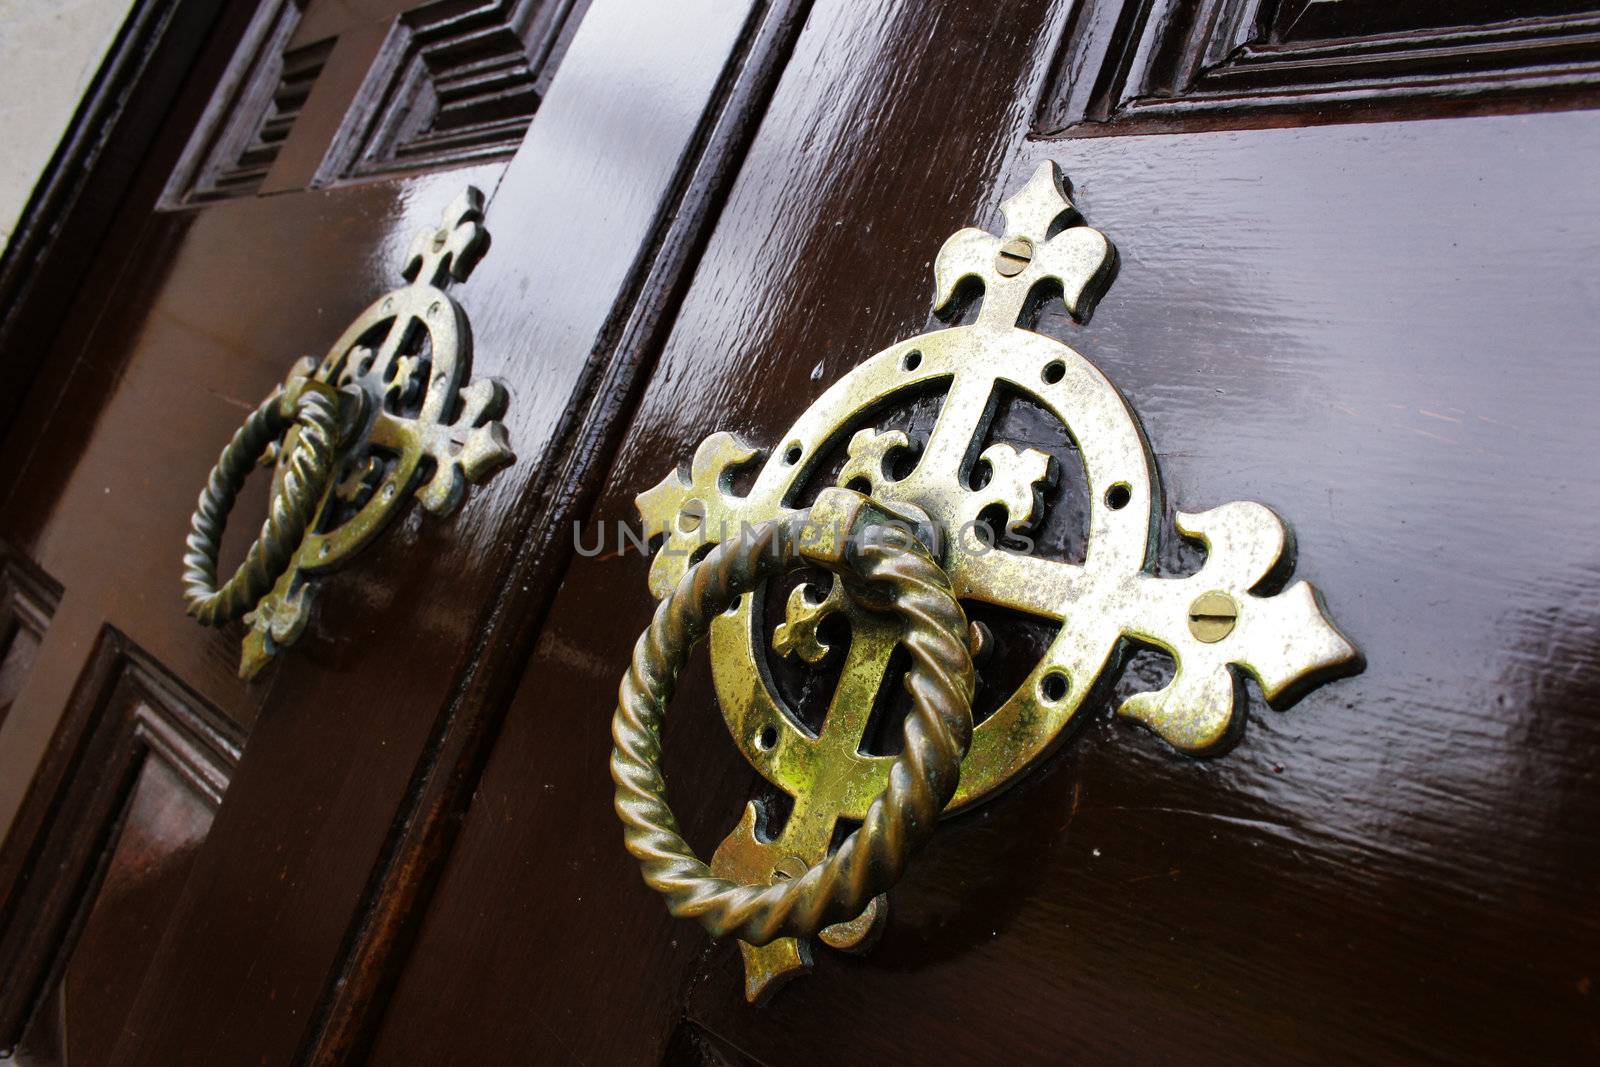 Old metal door handle knockers  by cristiaciobanu